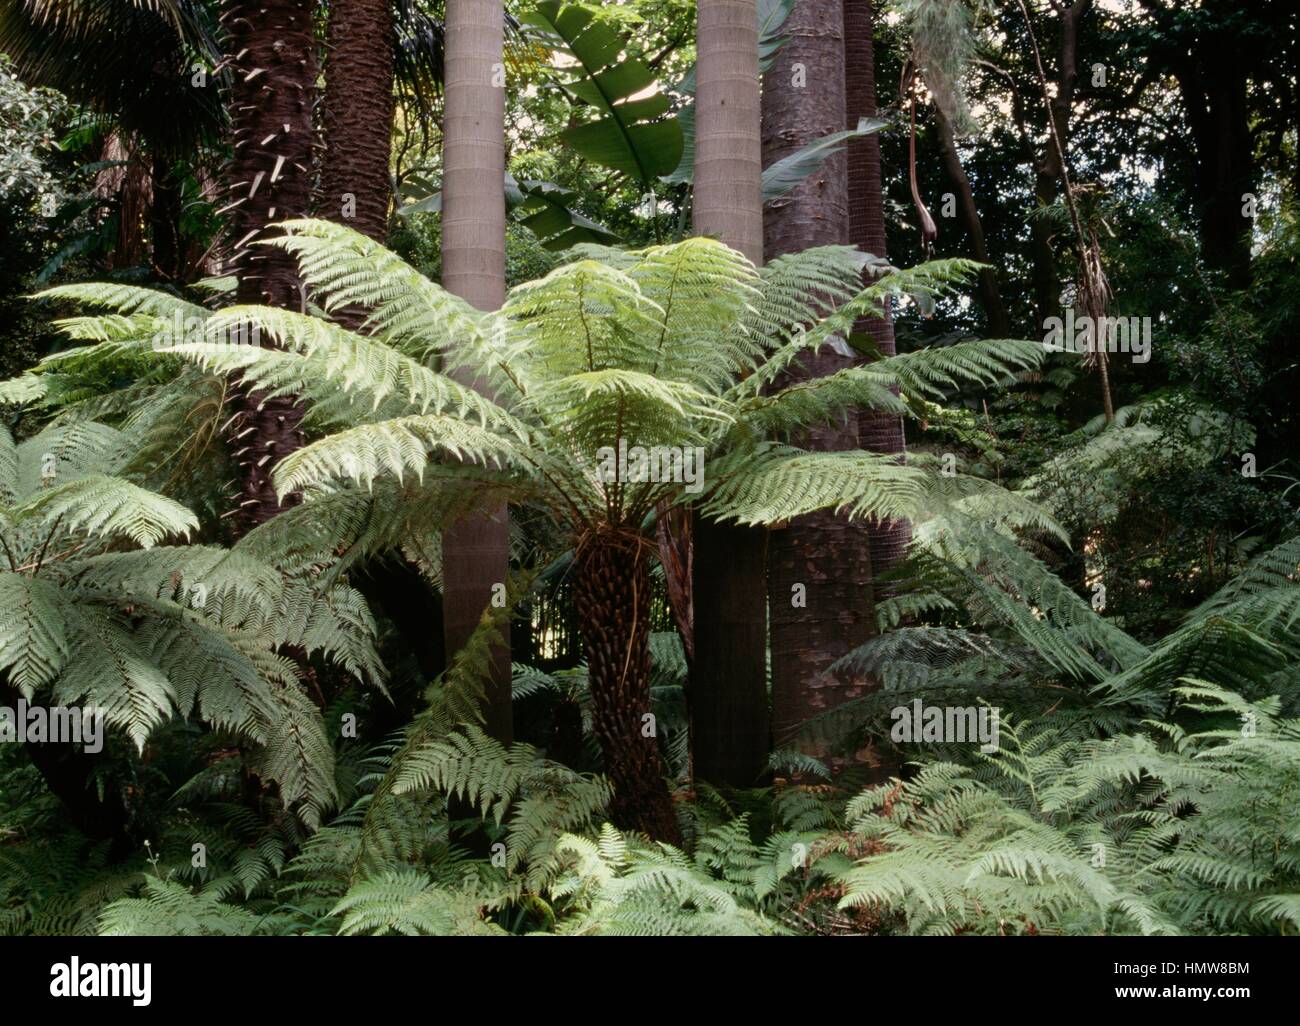 Rough Tree Fern (Cyathea australis or Alsophila australis), Cyatheaceae, Australia. Stock Photo